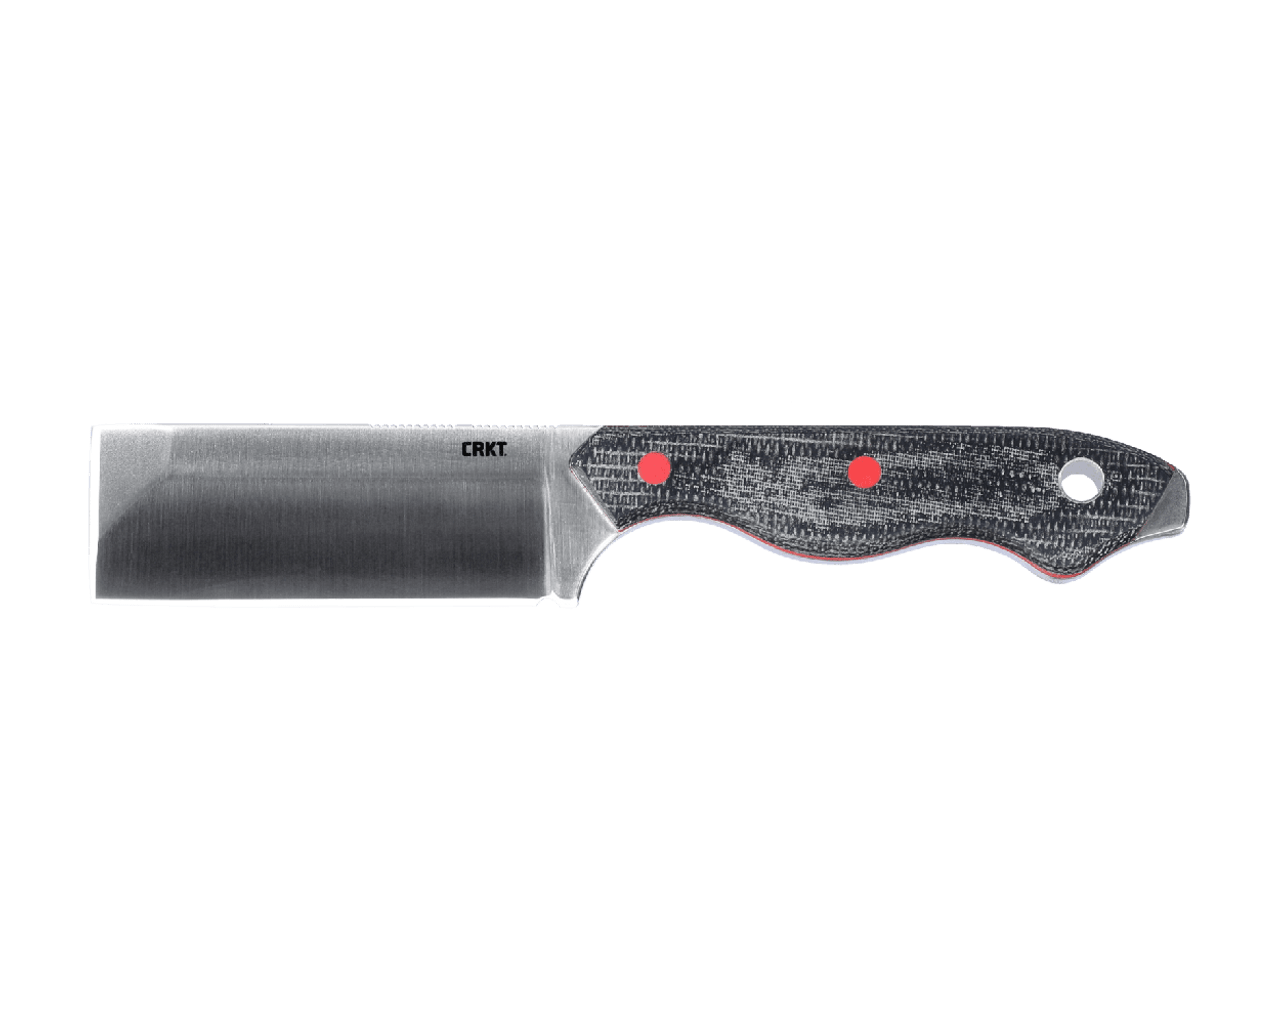 CRKT Razel Fixed Blade Knife, 2.97" Blade, Sheath